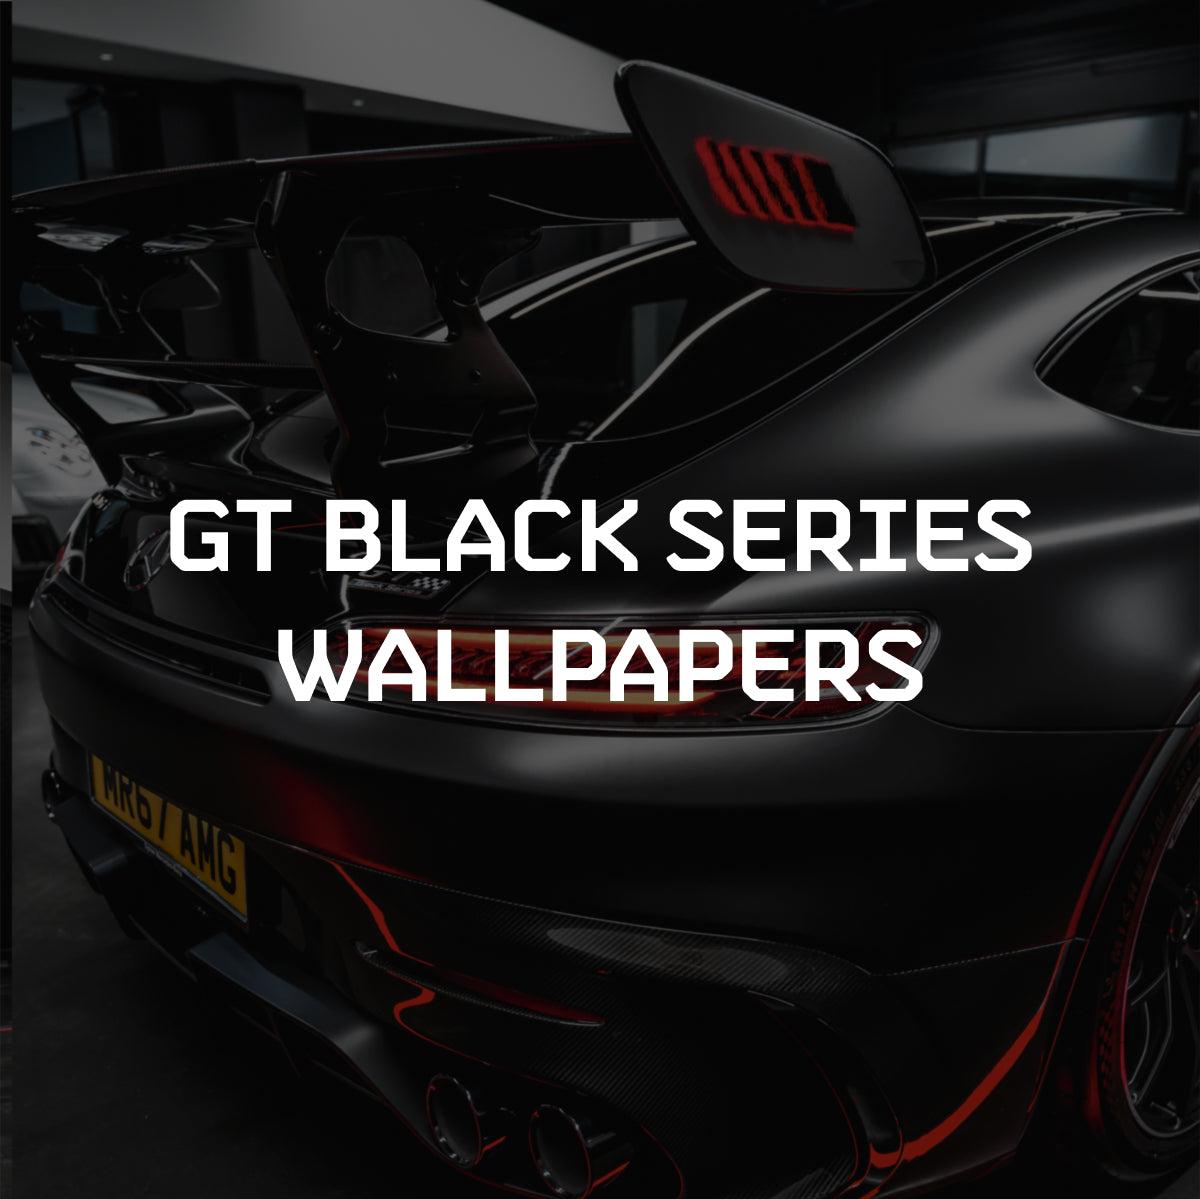 Mercedes Amg Gt Black Series Wallpaper Pack Removebeforerace